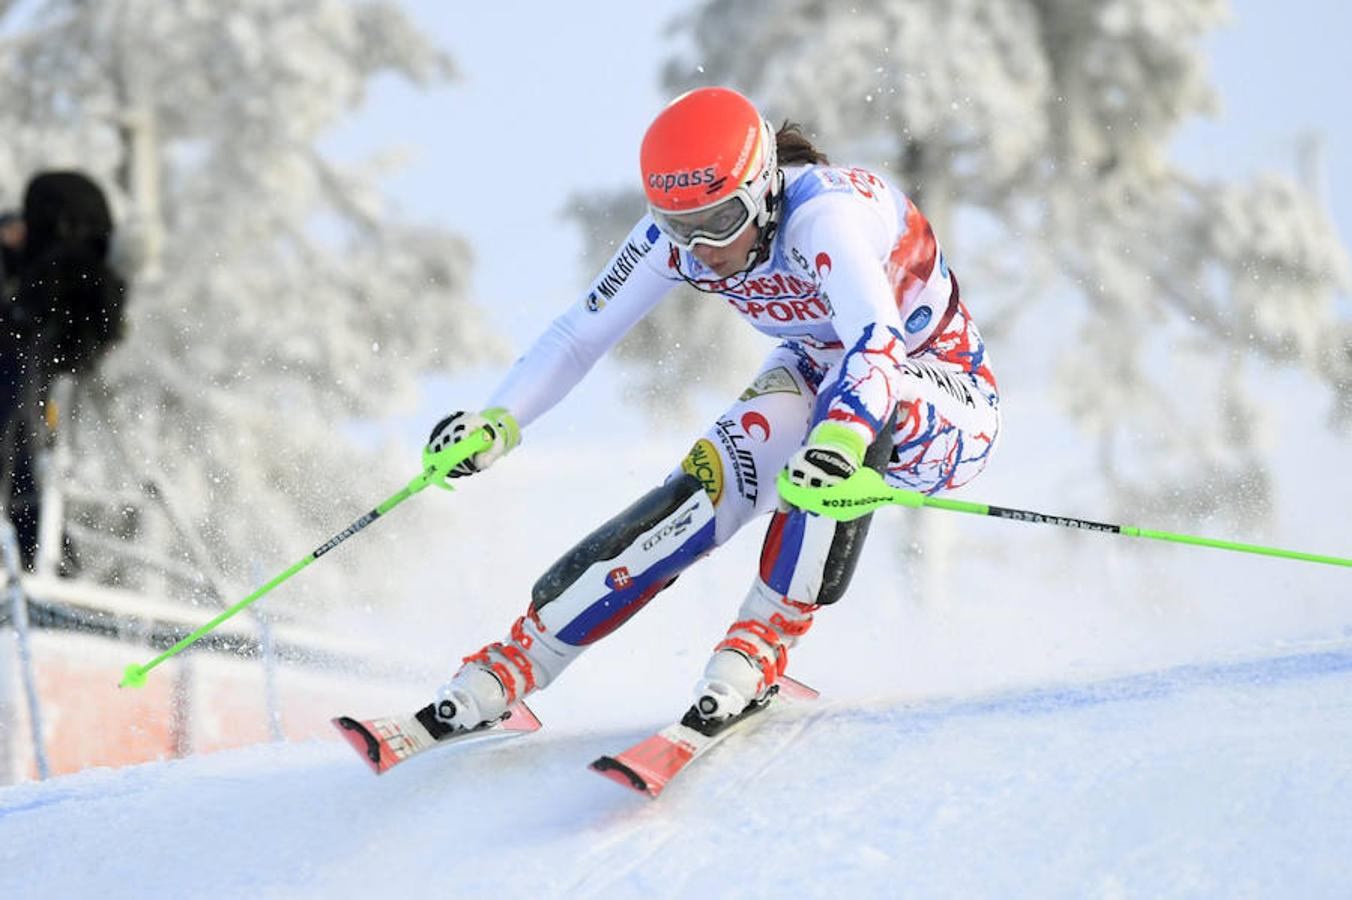 Este sábado se ha celebrado la primera carrera de slalom femenino de la temporada de la Copa del Mundo de esquí FIS en Levi, Finlandia.